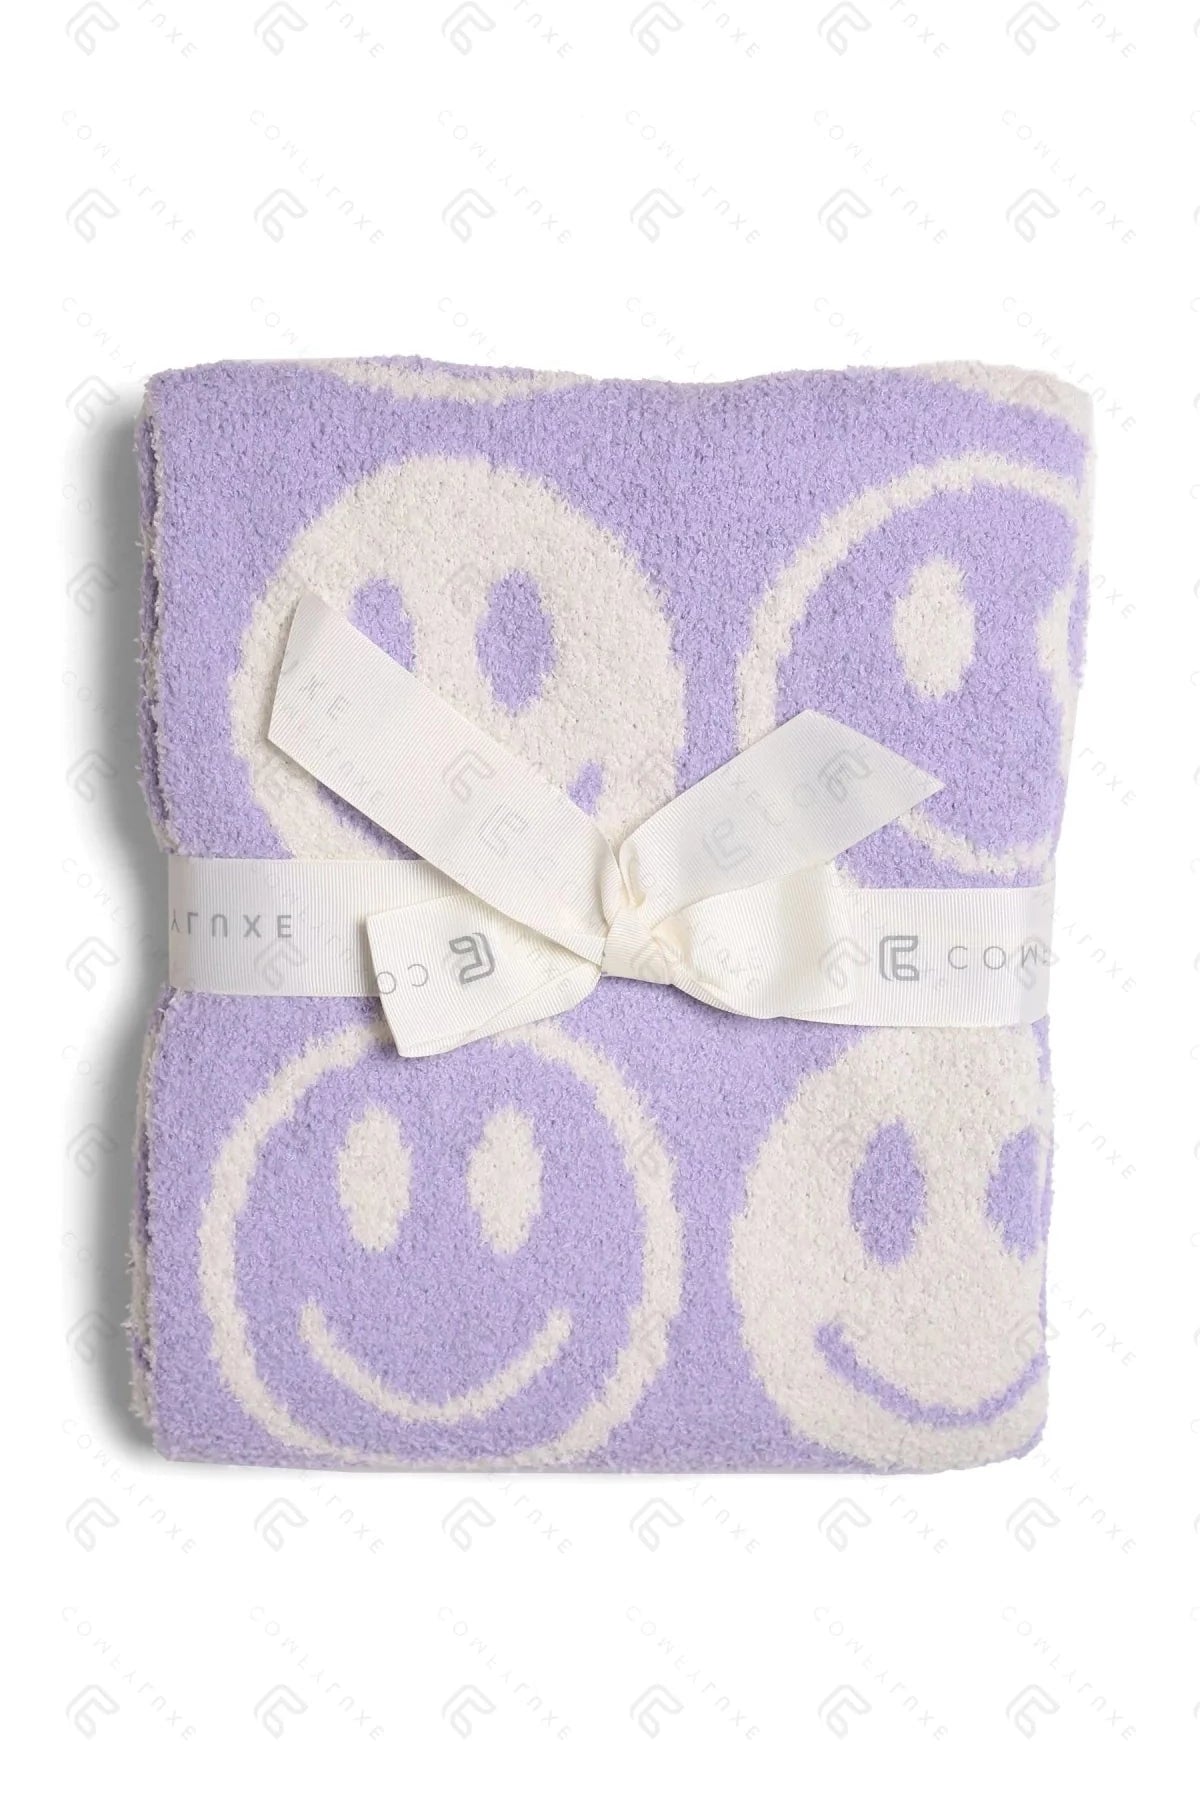 Lavender Happy Face Blanket